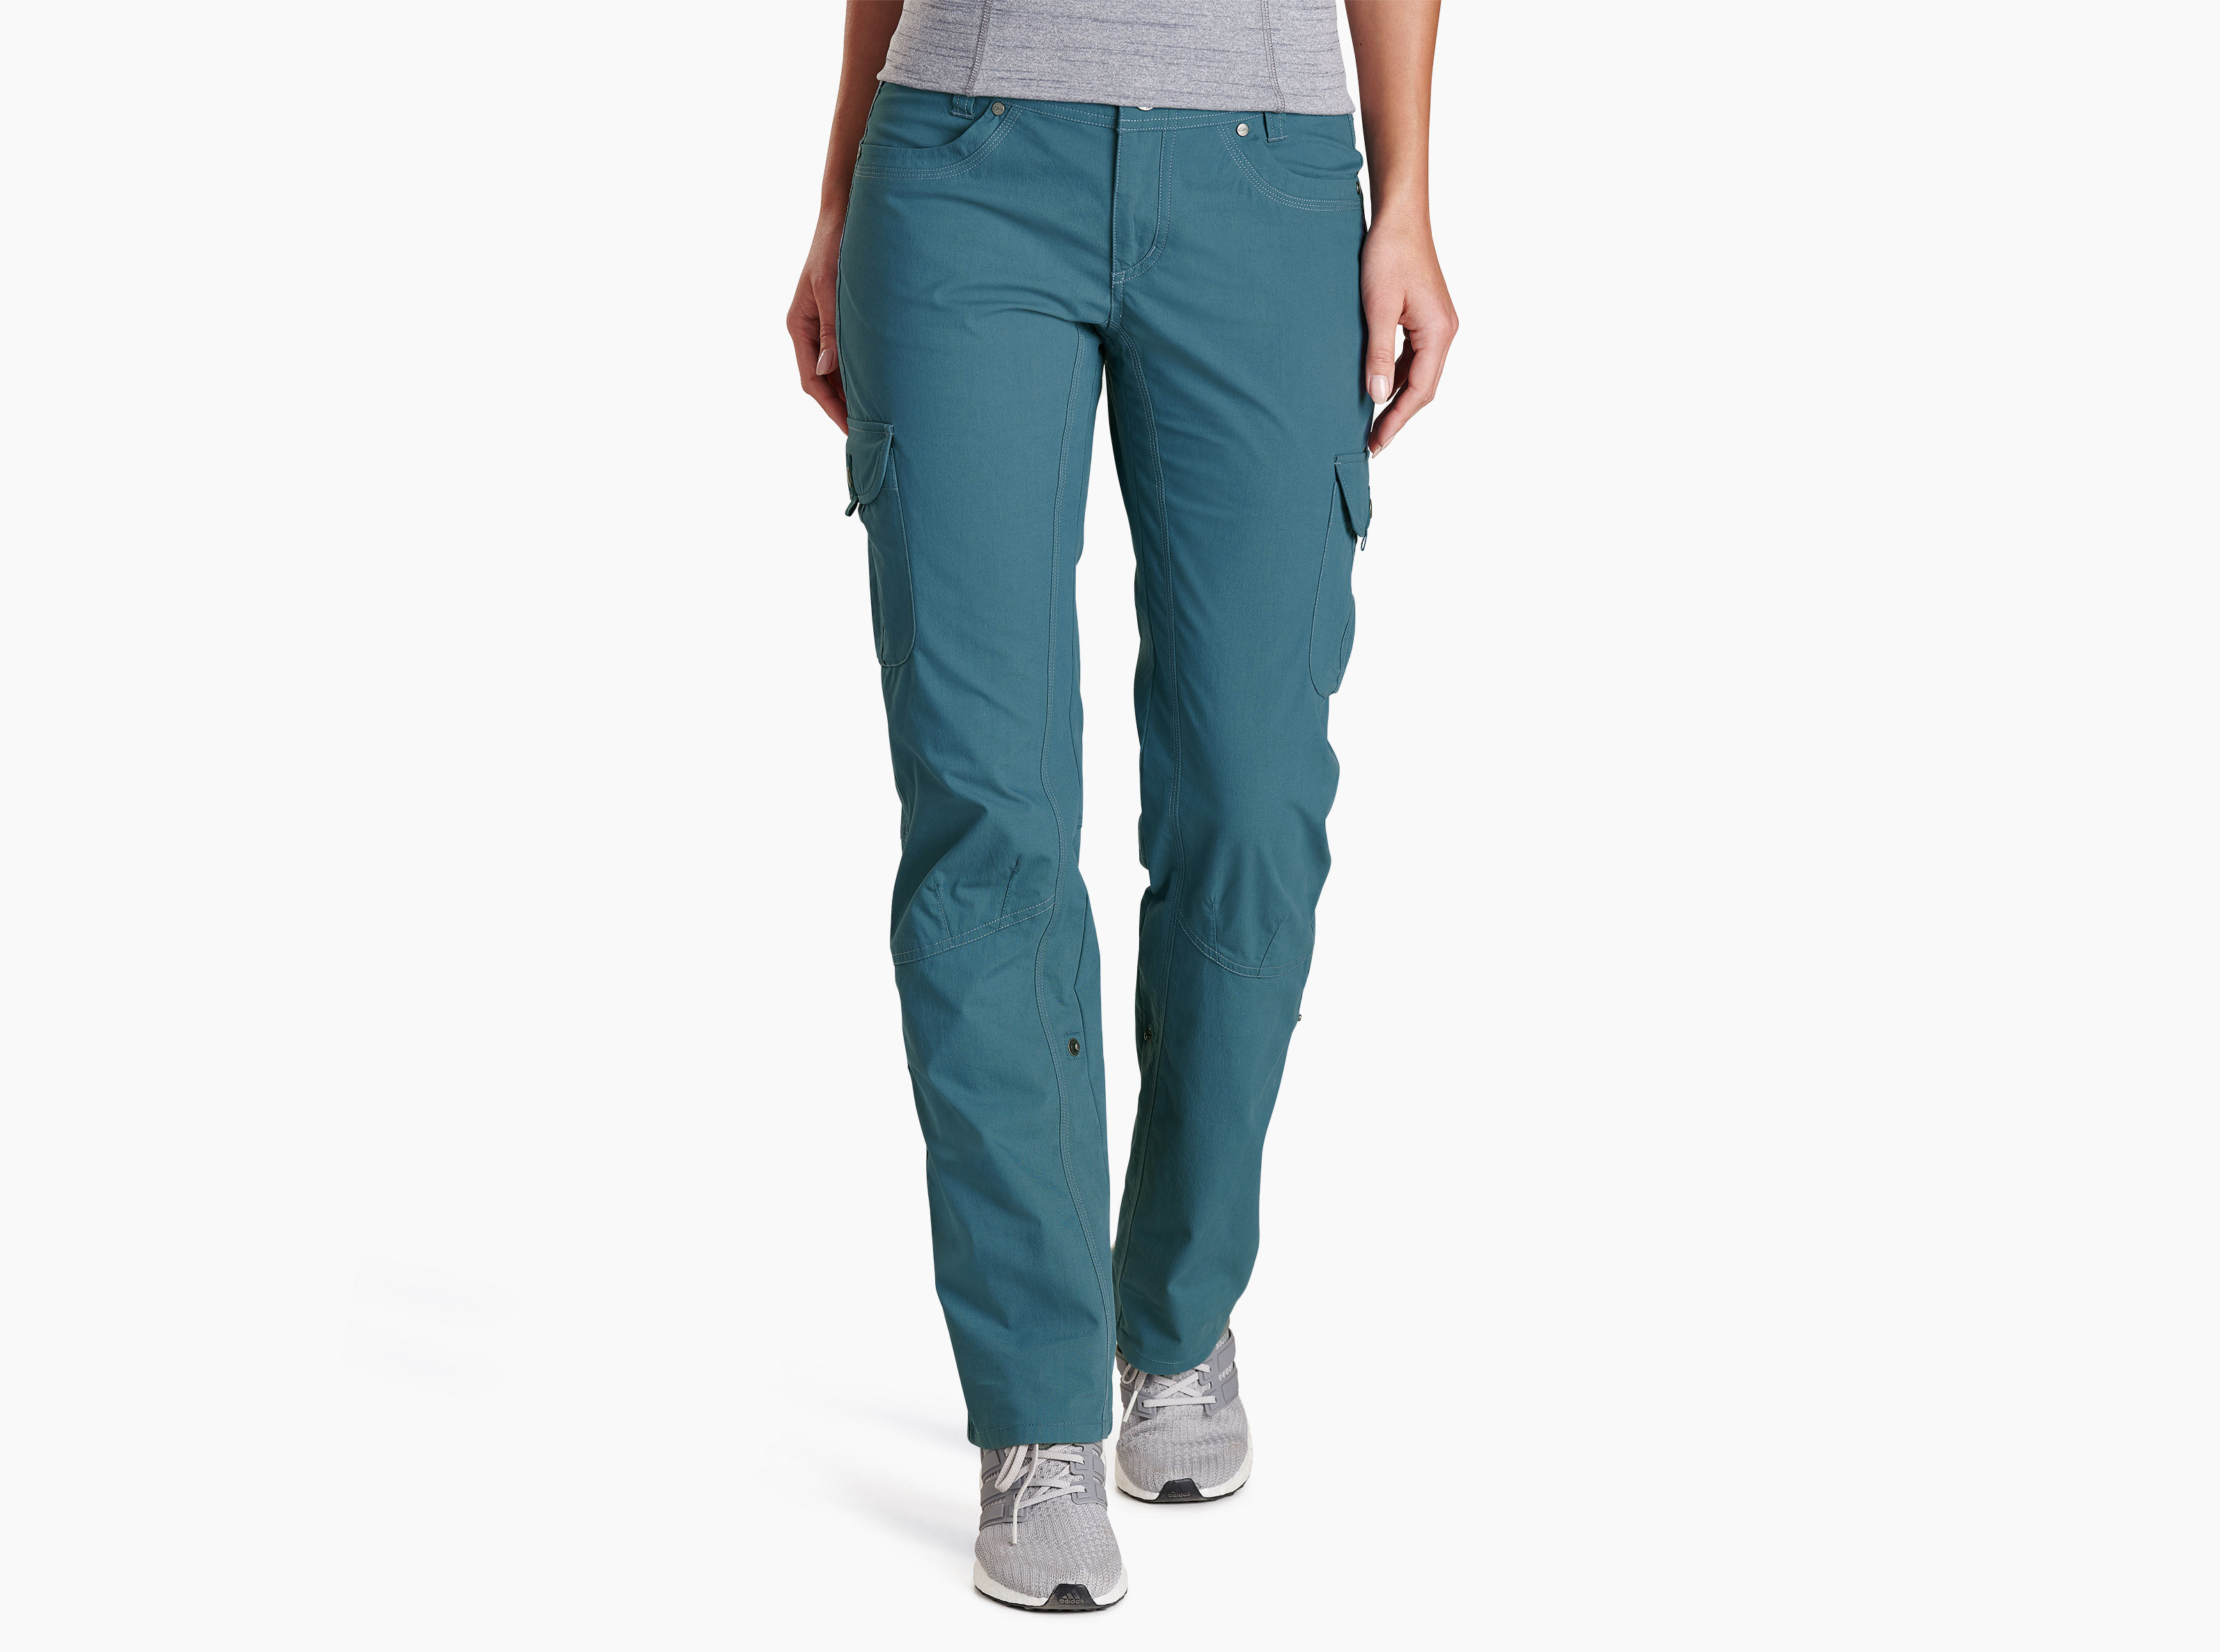 KUHL - Style 6279 Light Blue Spire Roll Up Hiking Pants - Women's Size 2  REG 🔥